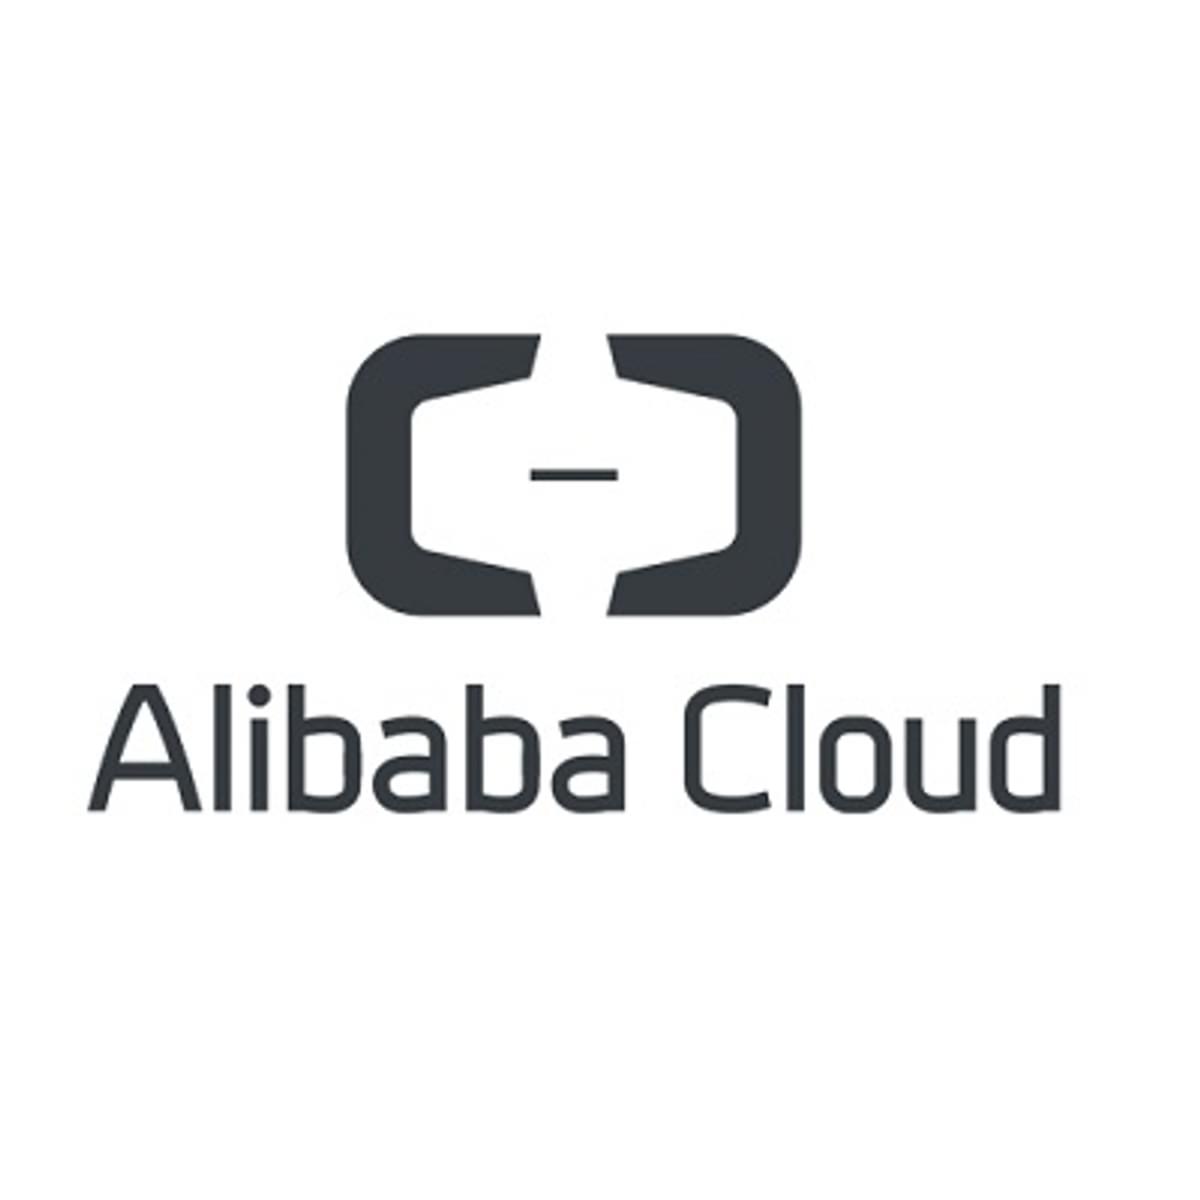 KPMG en Alibaba Cloud vormen alliantie rond digitale transformatie image